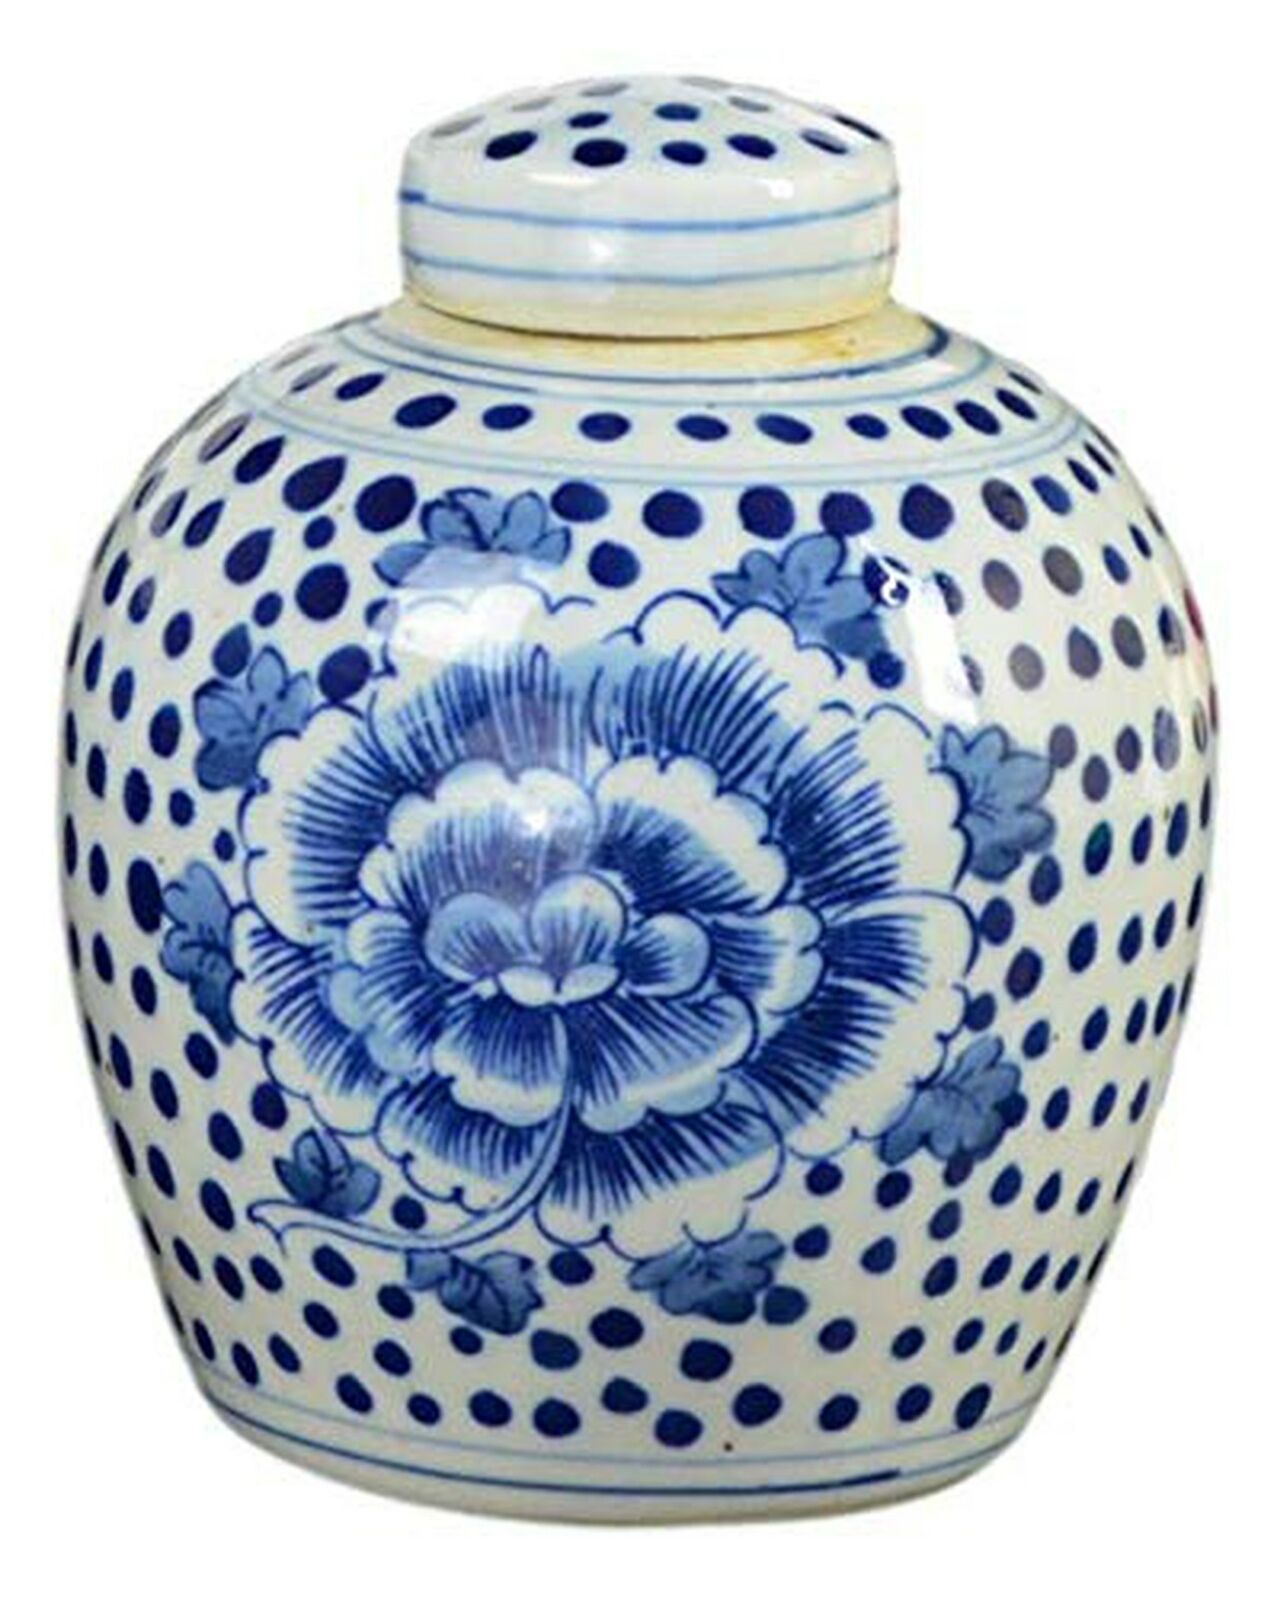 Festcool Antique Style Blue and White Porcelain Flowers Ceramic Covered Jar V...